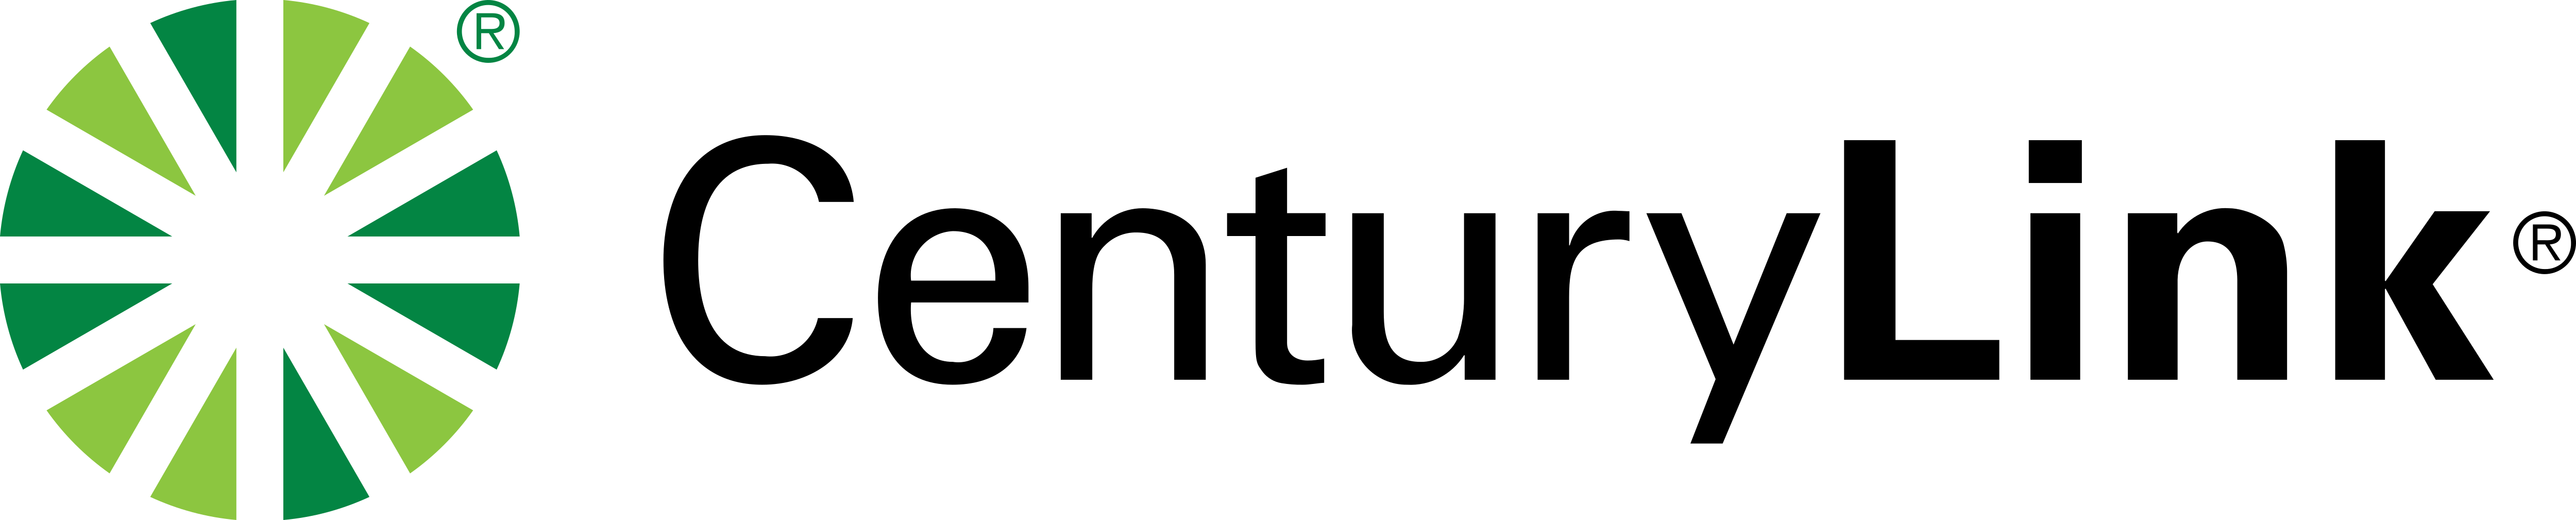 Centurylink logo PNG descargar imagen